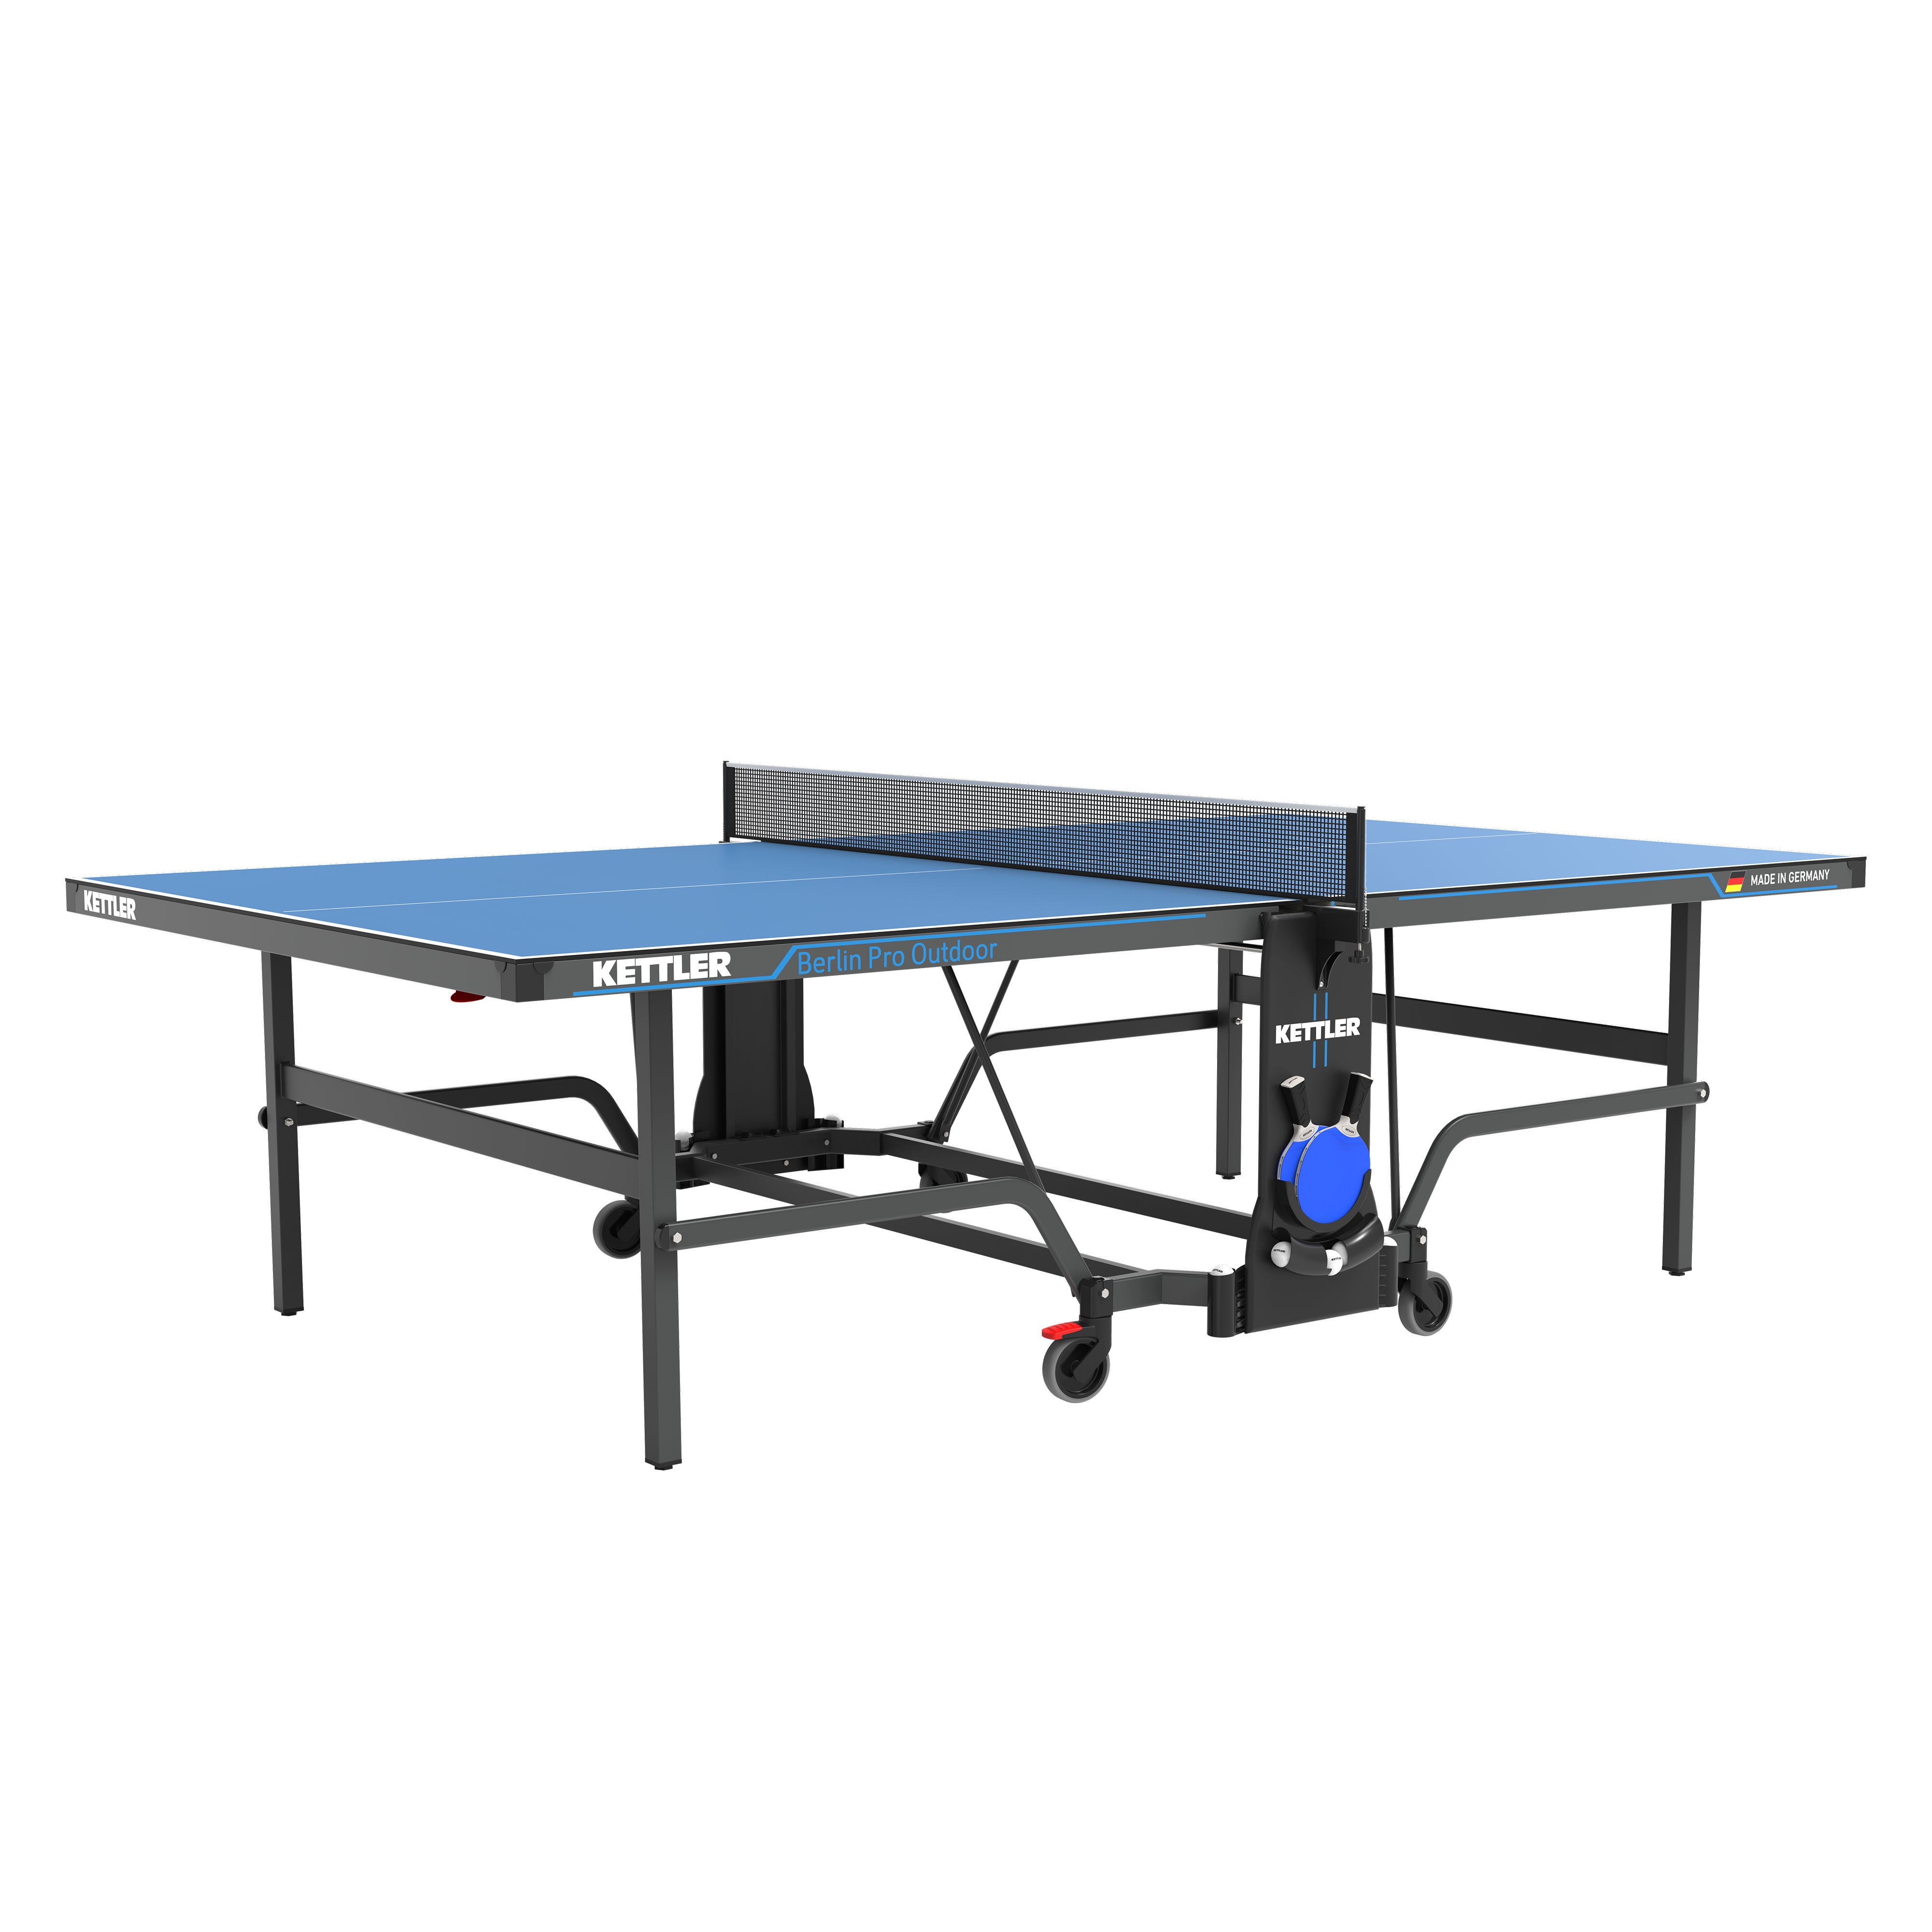 Berlin Pro Outdoor Table Tennis Table 4-Player Bundle